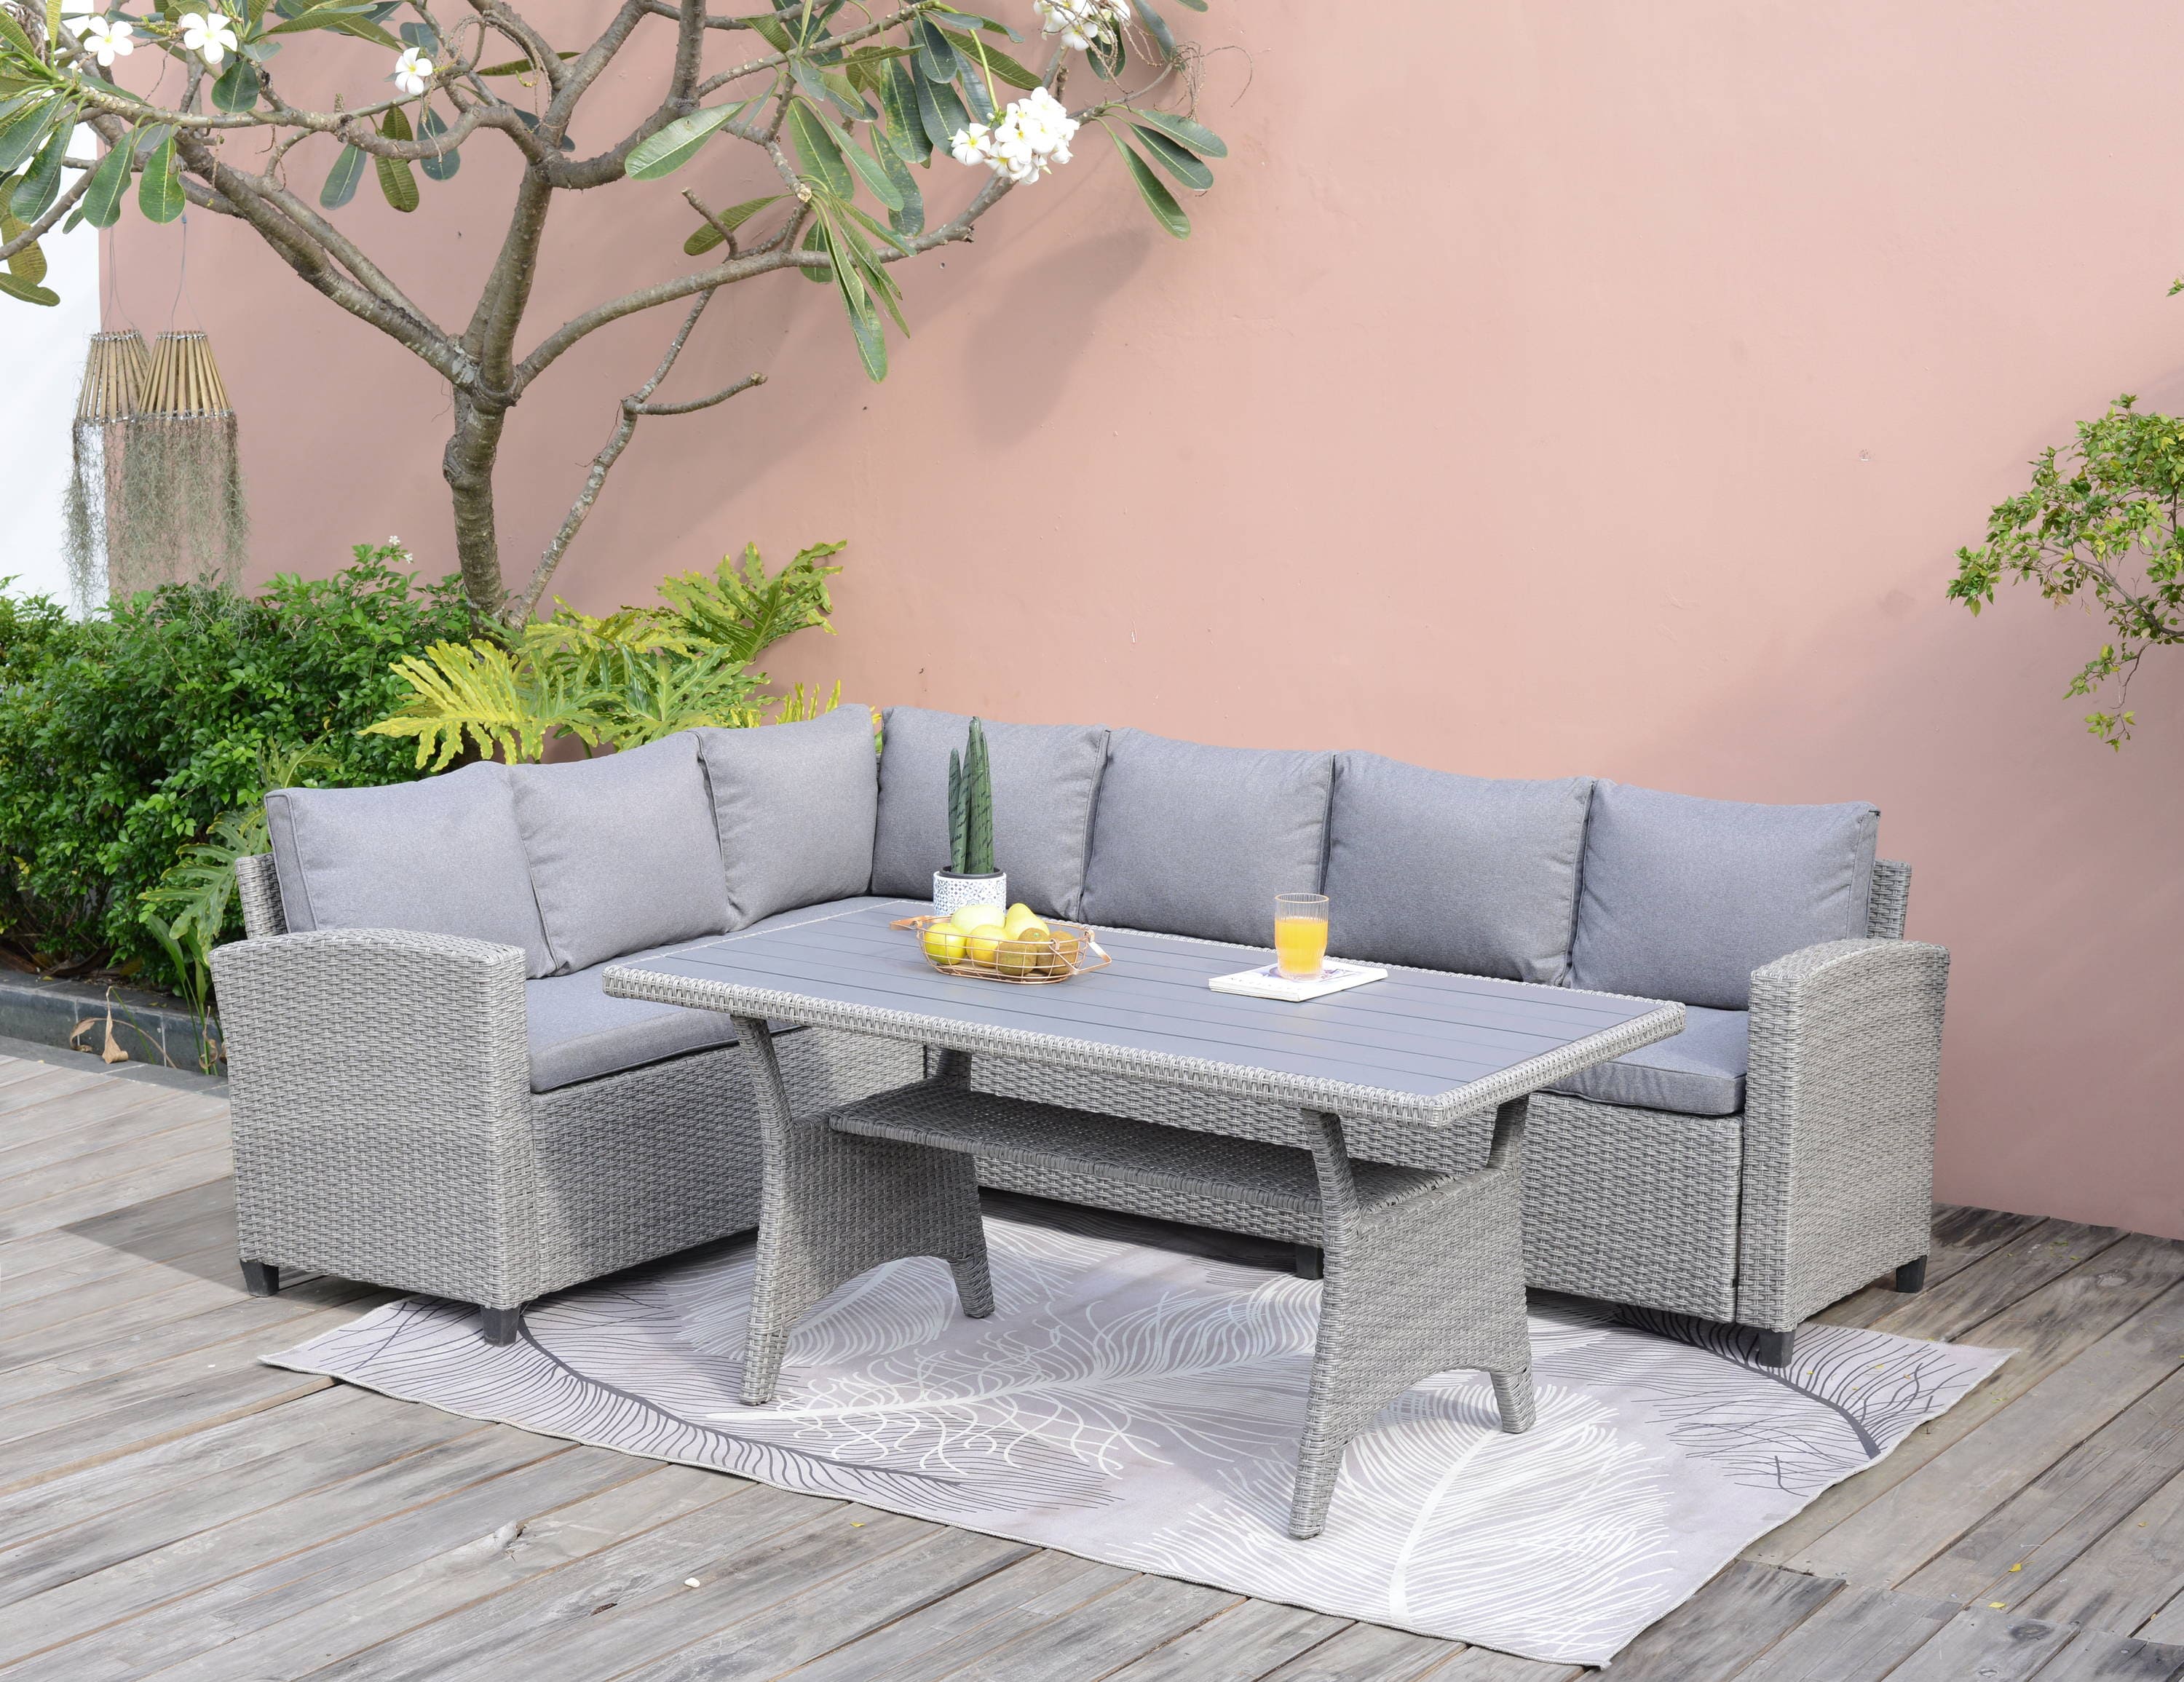 Rattan Wicker Corner Sofa Chair Couch Patio Garden Furniture w/ Cushion Home Use 